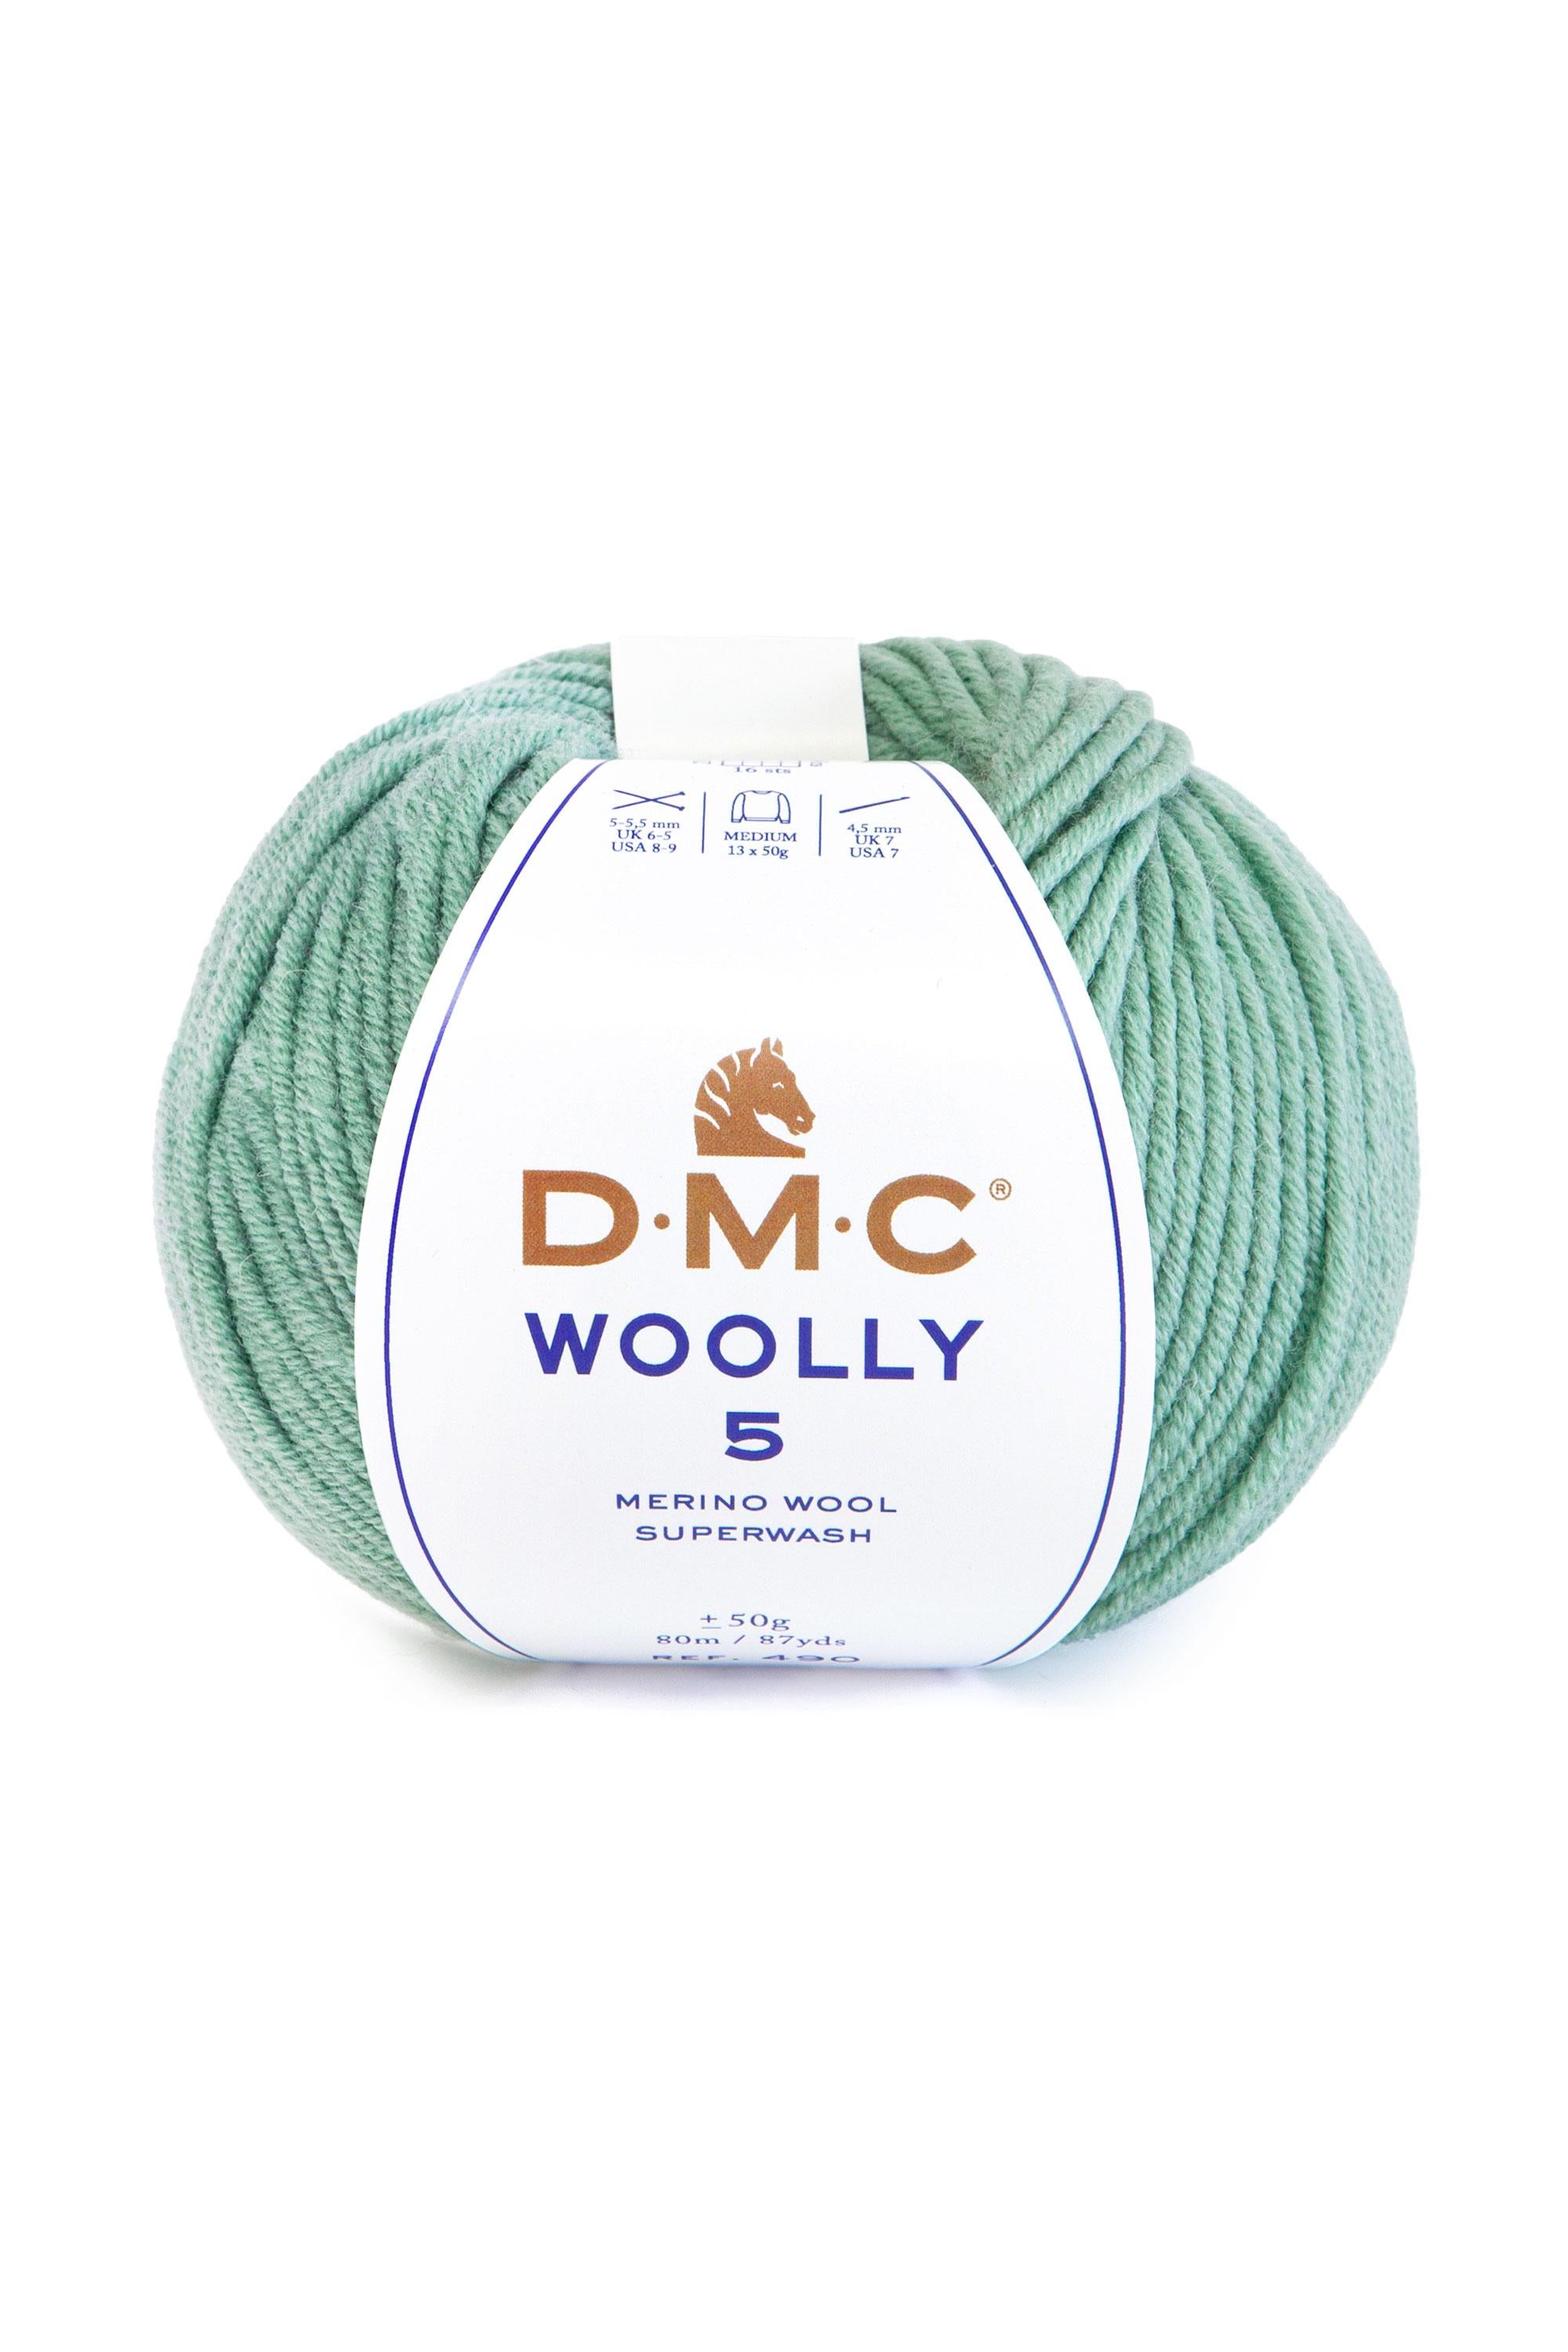 Lana Dmc Woolly 5 Colore 91